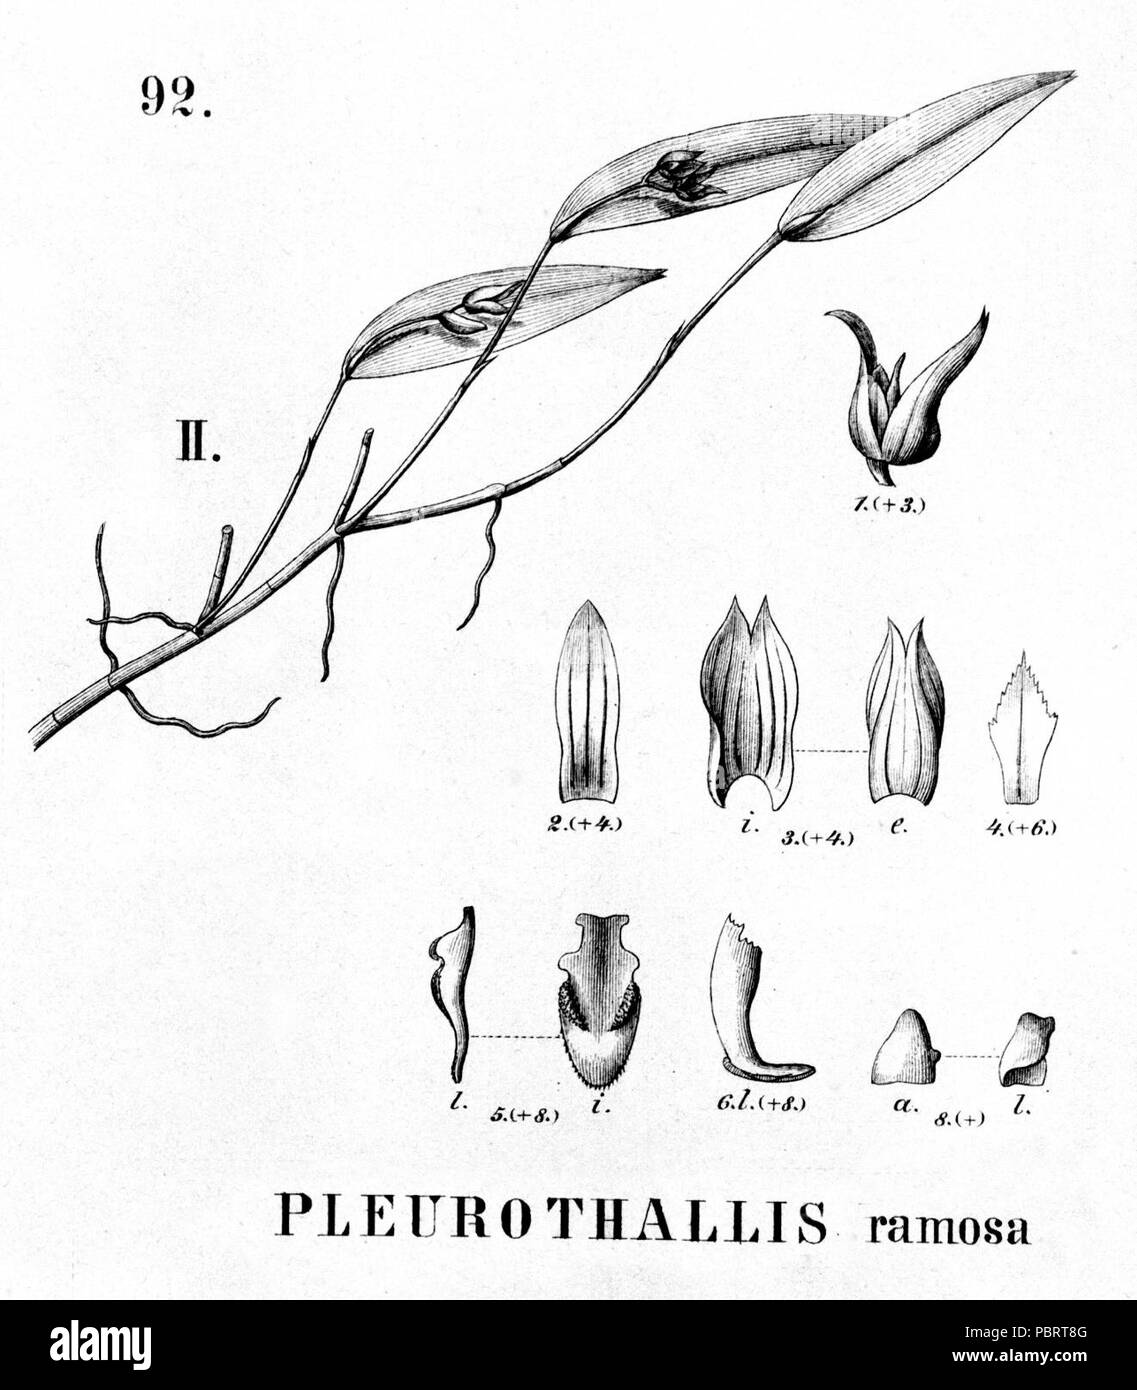 Acianthera ramosa (as Pleurothallis ramosa) - cutout from Flora Brasiliensis 3-4-92 fig II. Stock Photo